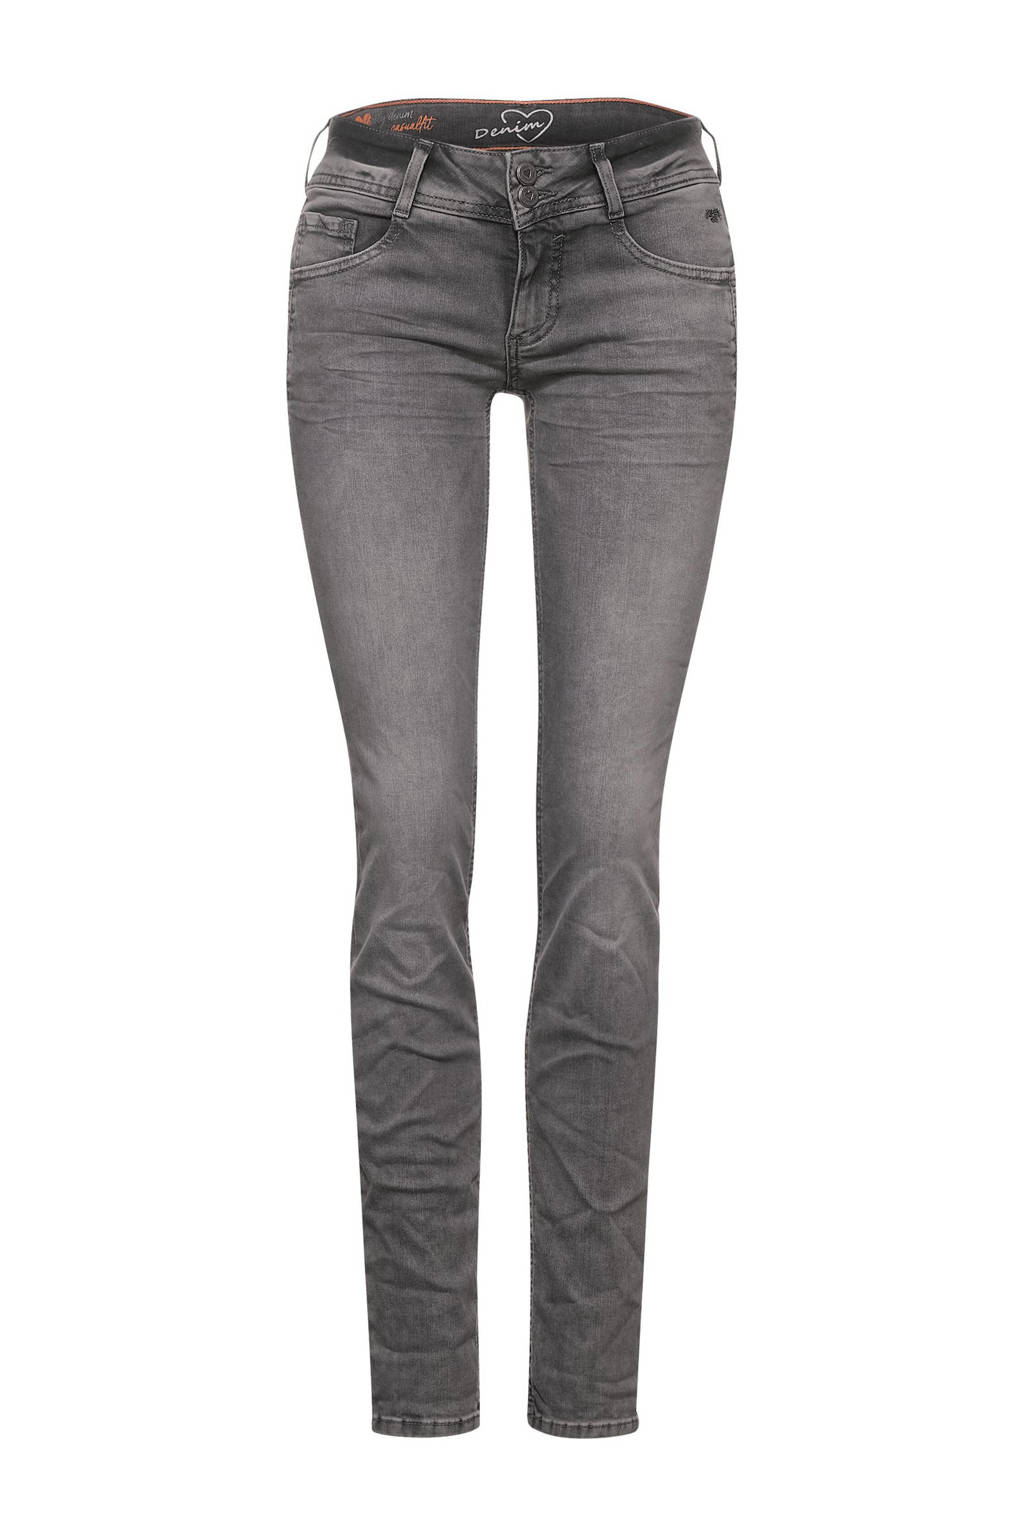 Street One low waist slim fit jeans Crissi grijs bleached